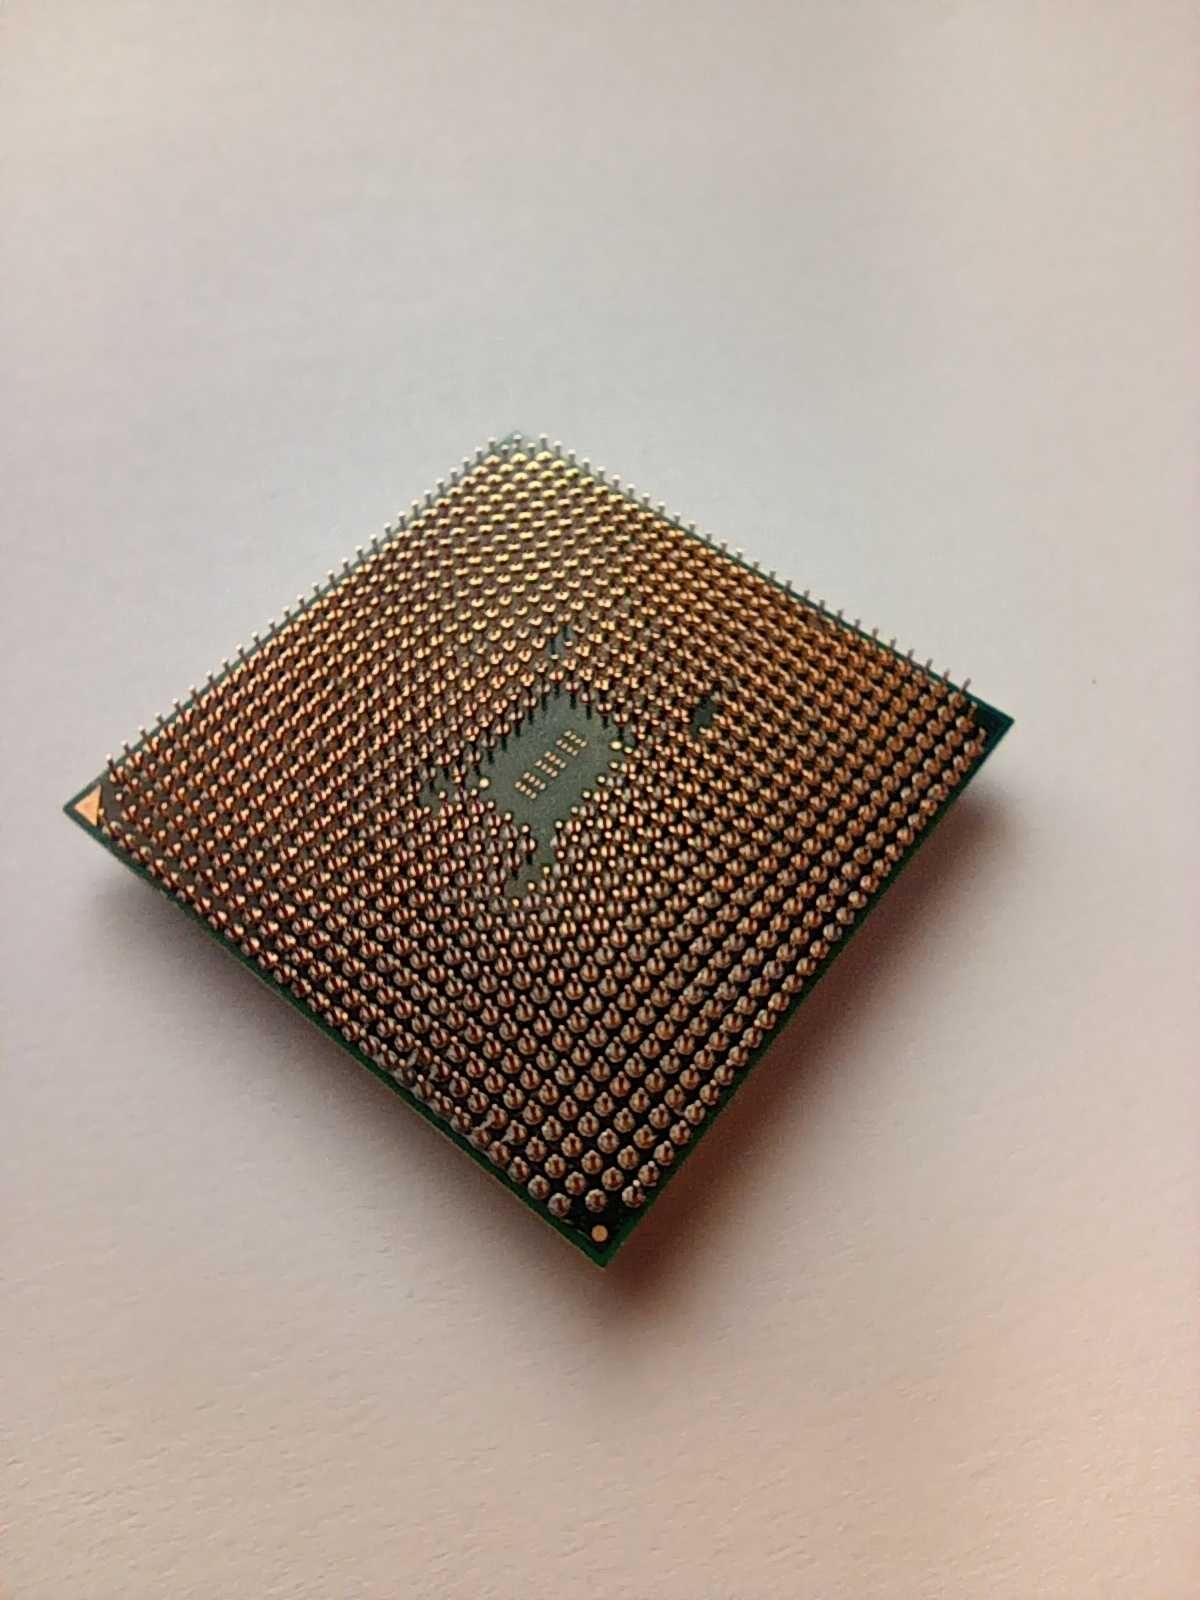 Procesor AMD Athlon X4 760K